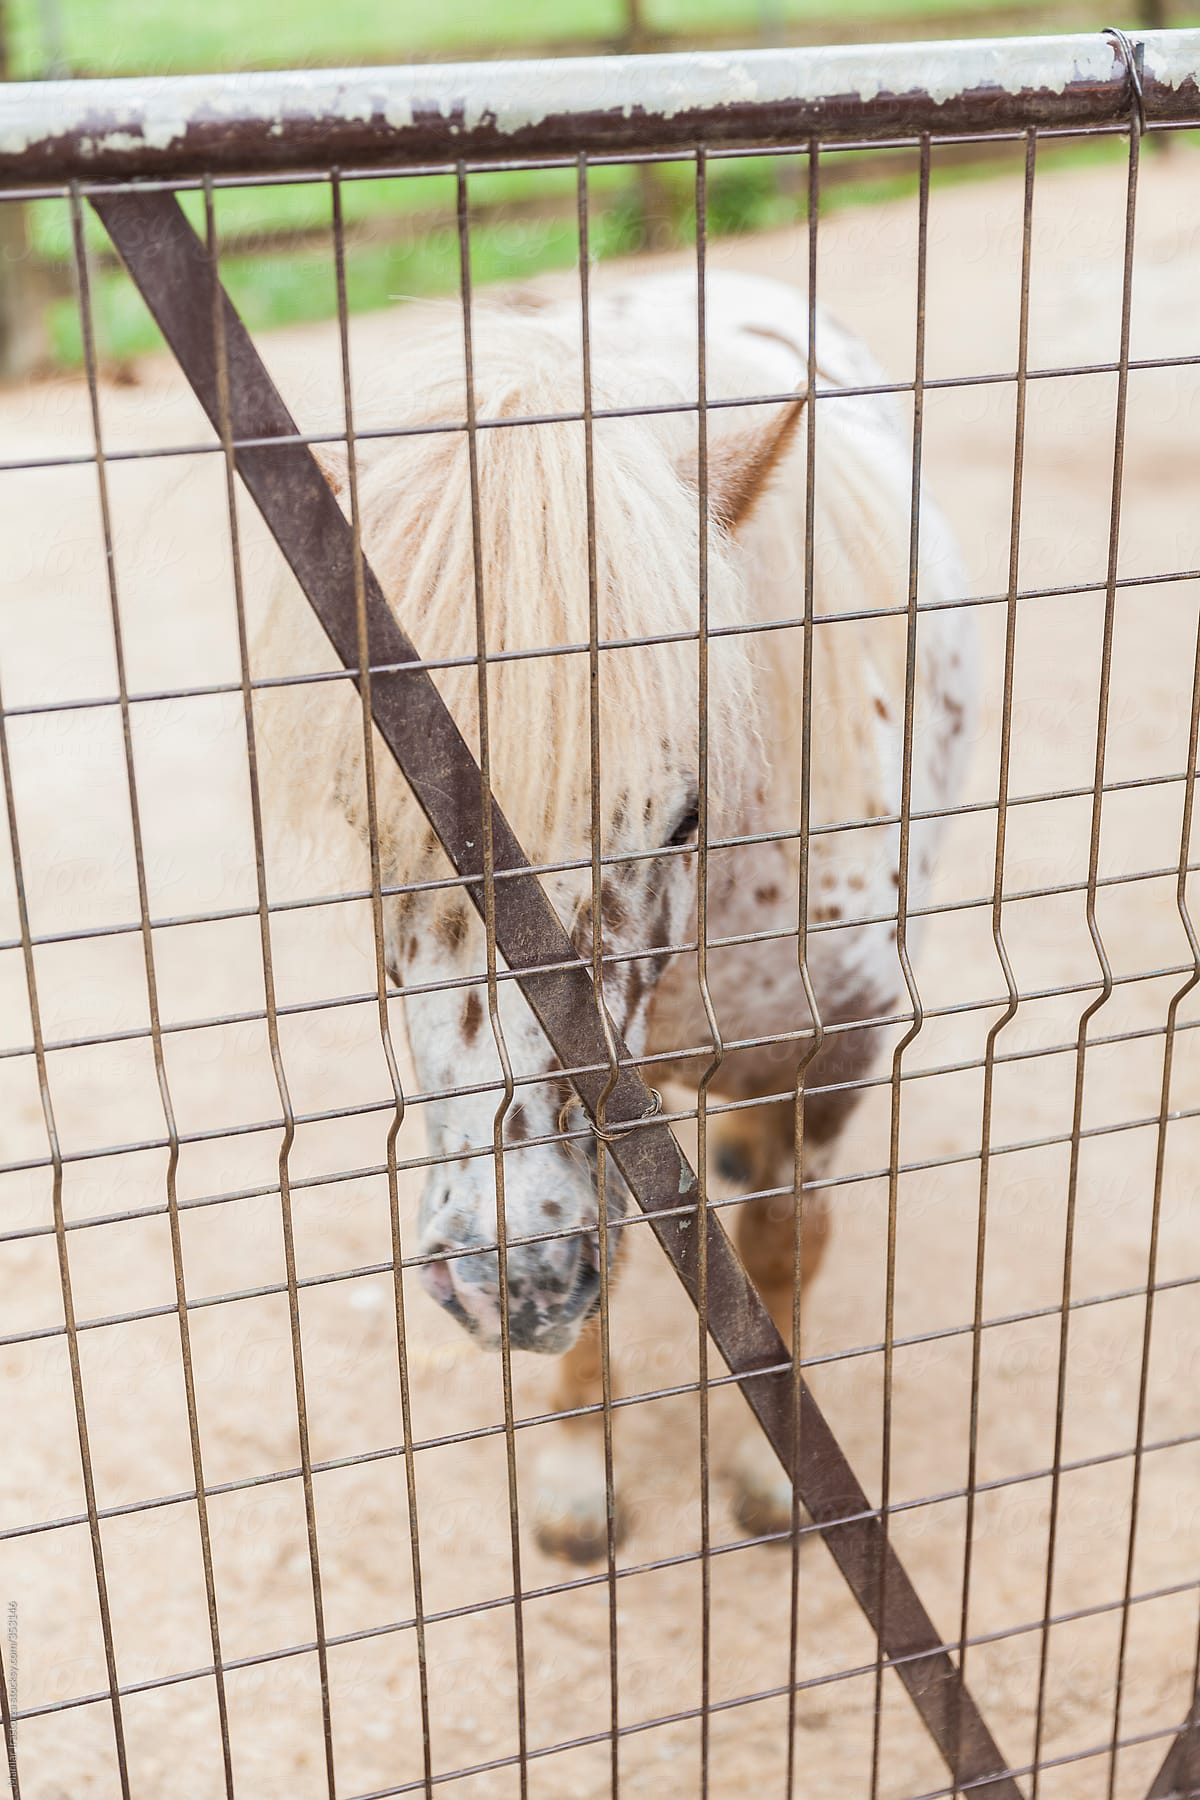 Sad pony behind a metal fence